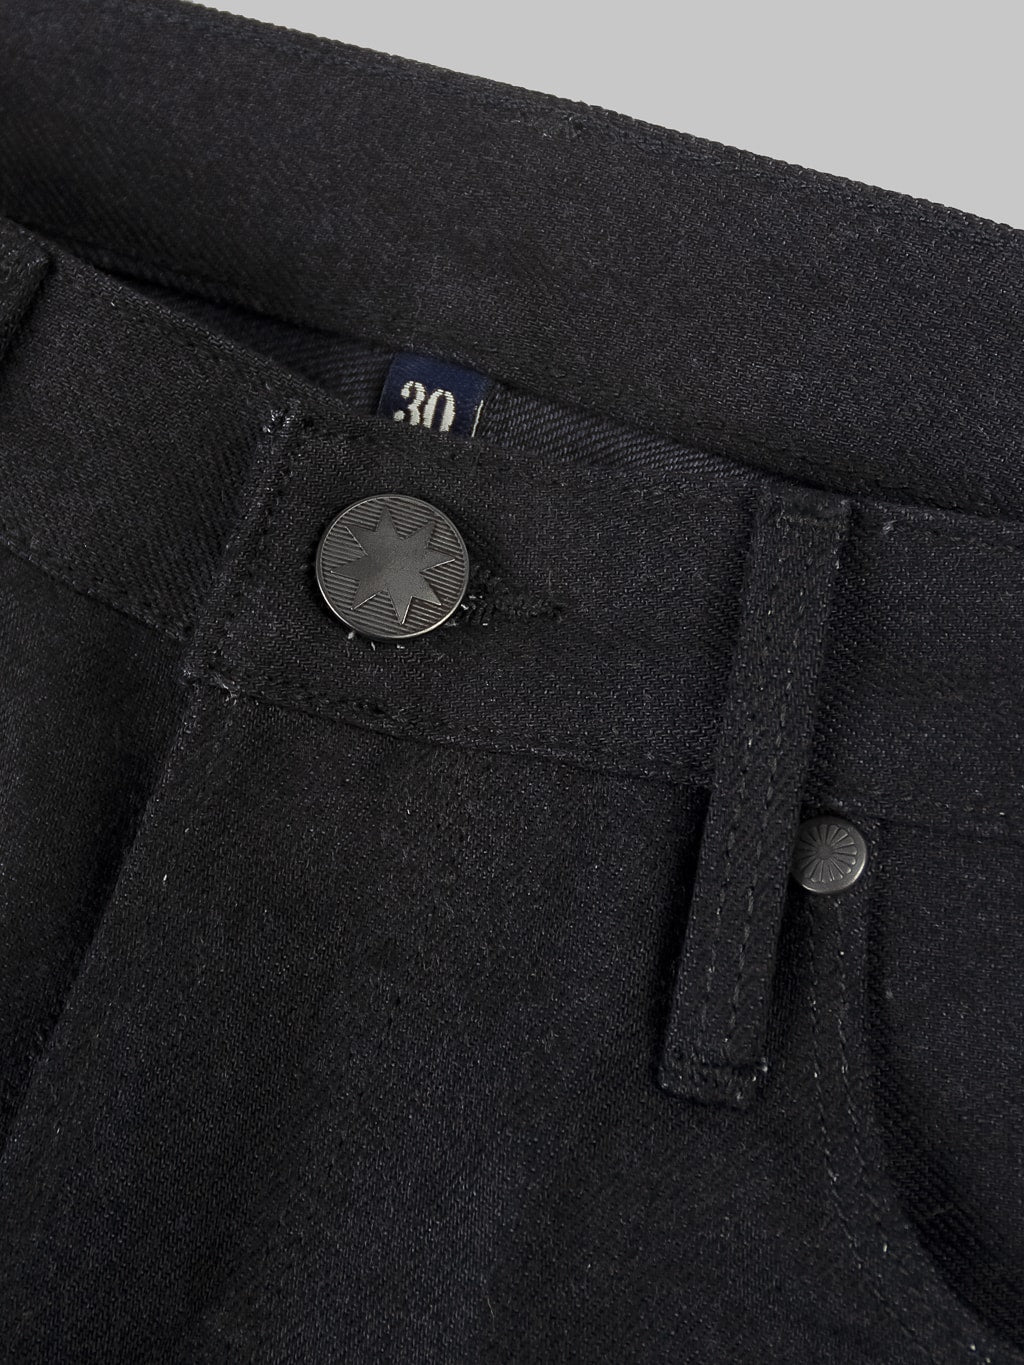 Freenote Cloth Rios Black Grey Japanese Denim Slim Straight Jeans button